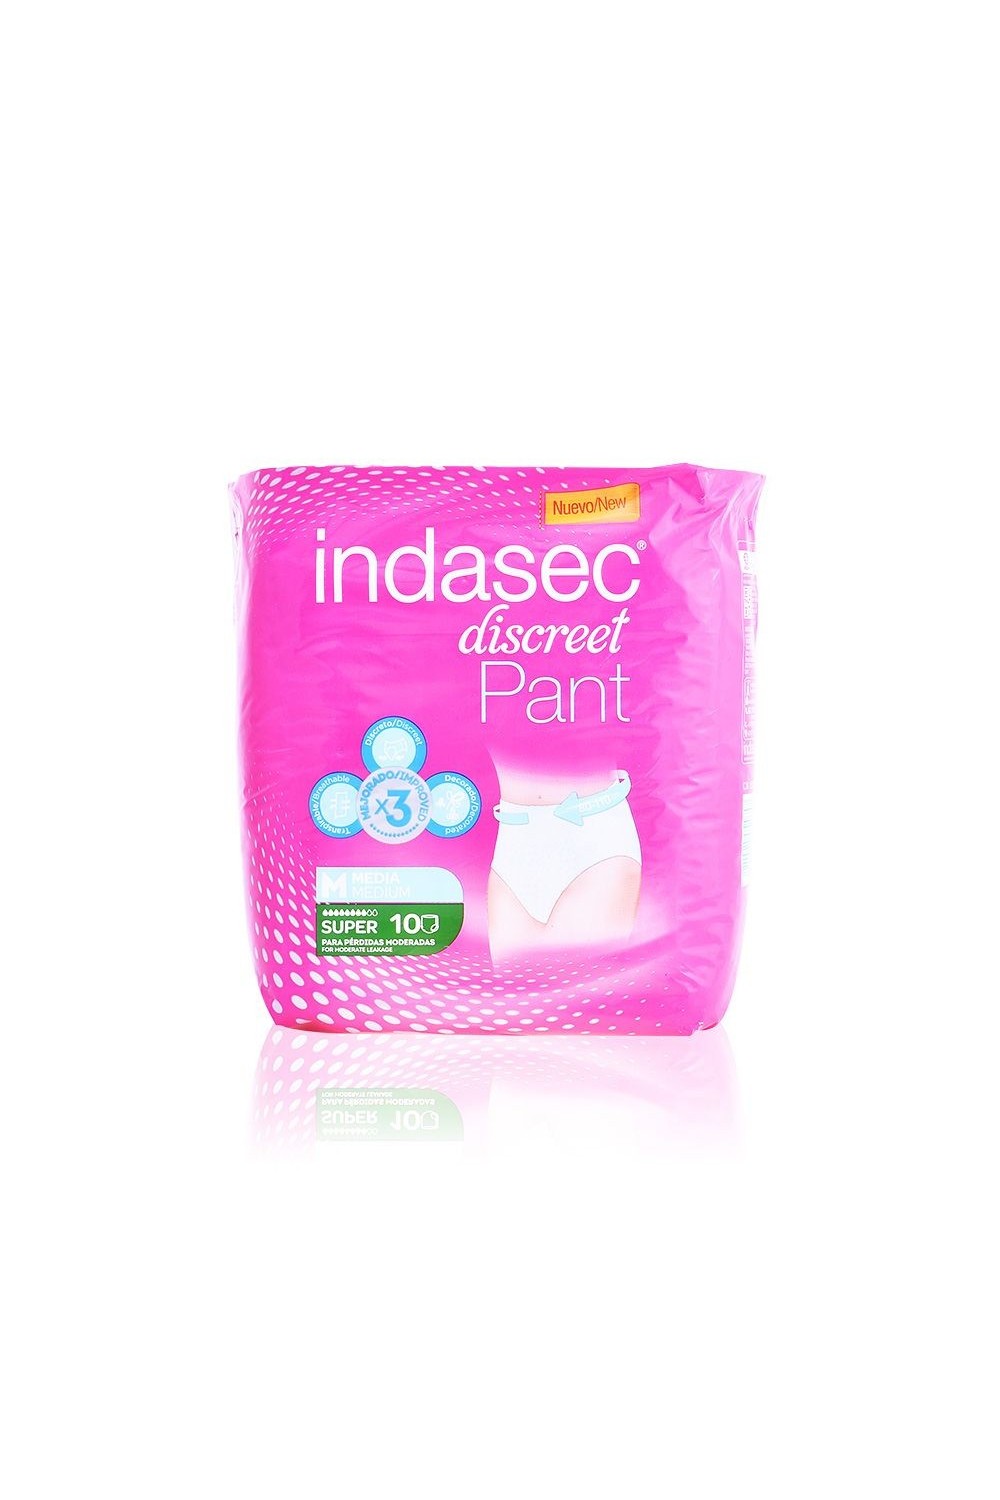 Indasec Pant Super Medium Size 10 Units